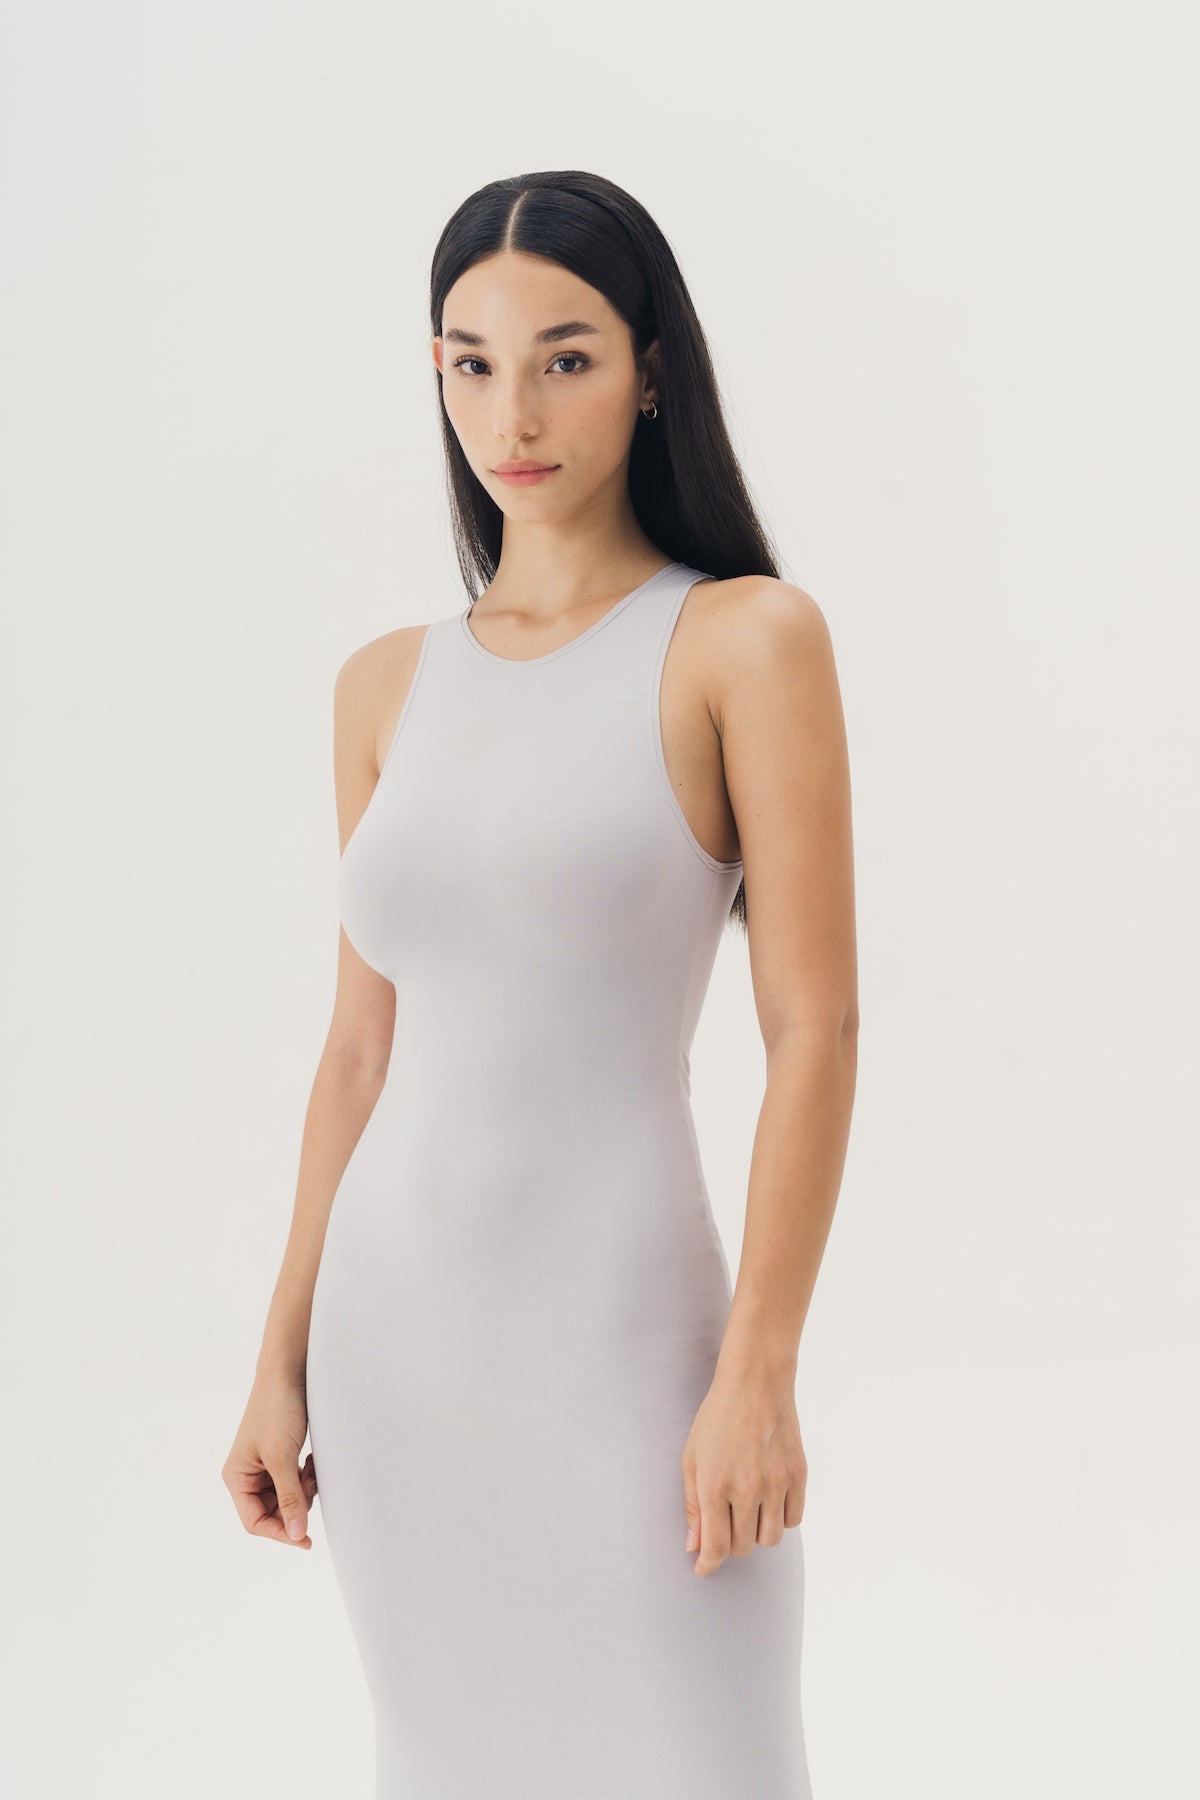 Basic Sleeveless Maxi Dress in Silver Grey (3L LEFT)